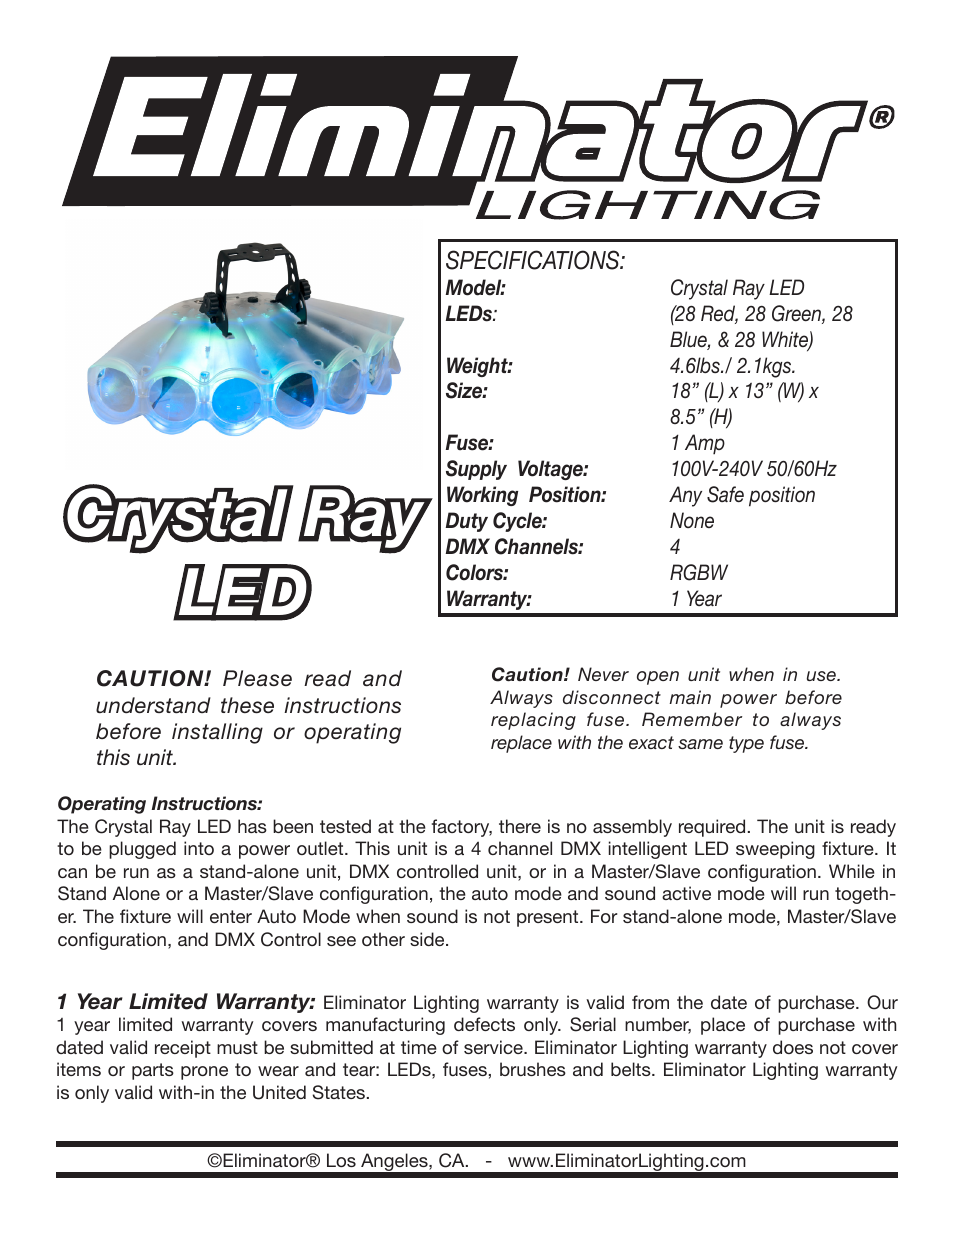 Crystal Ray LED